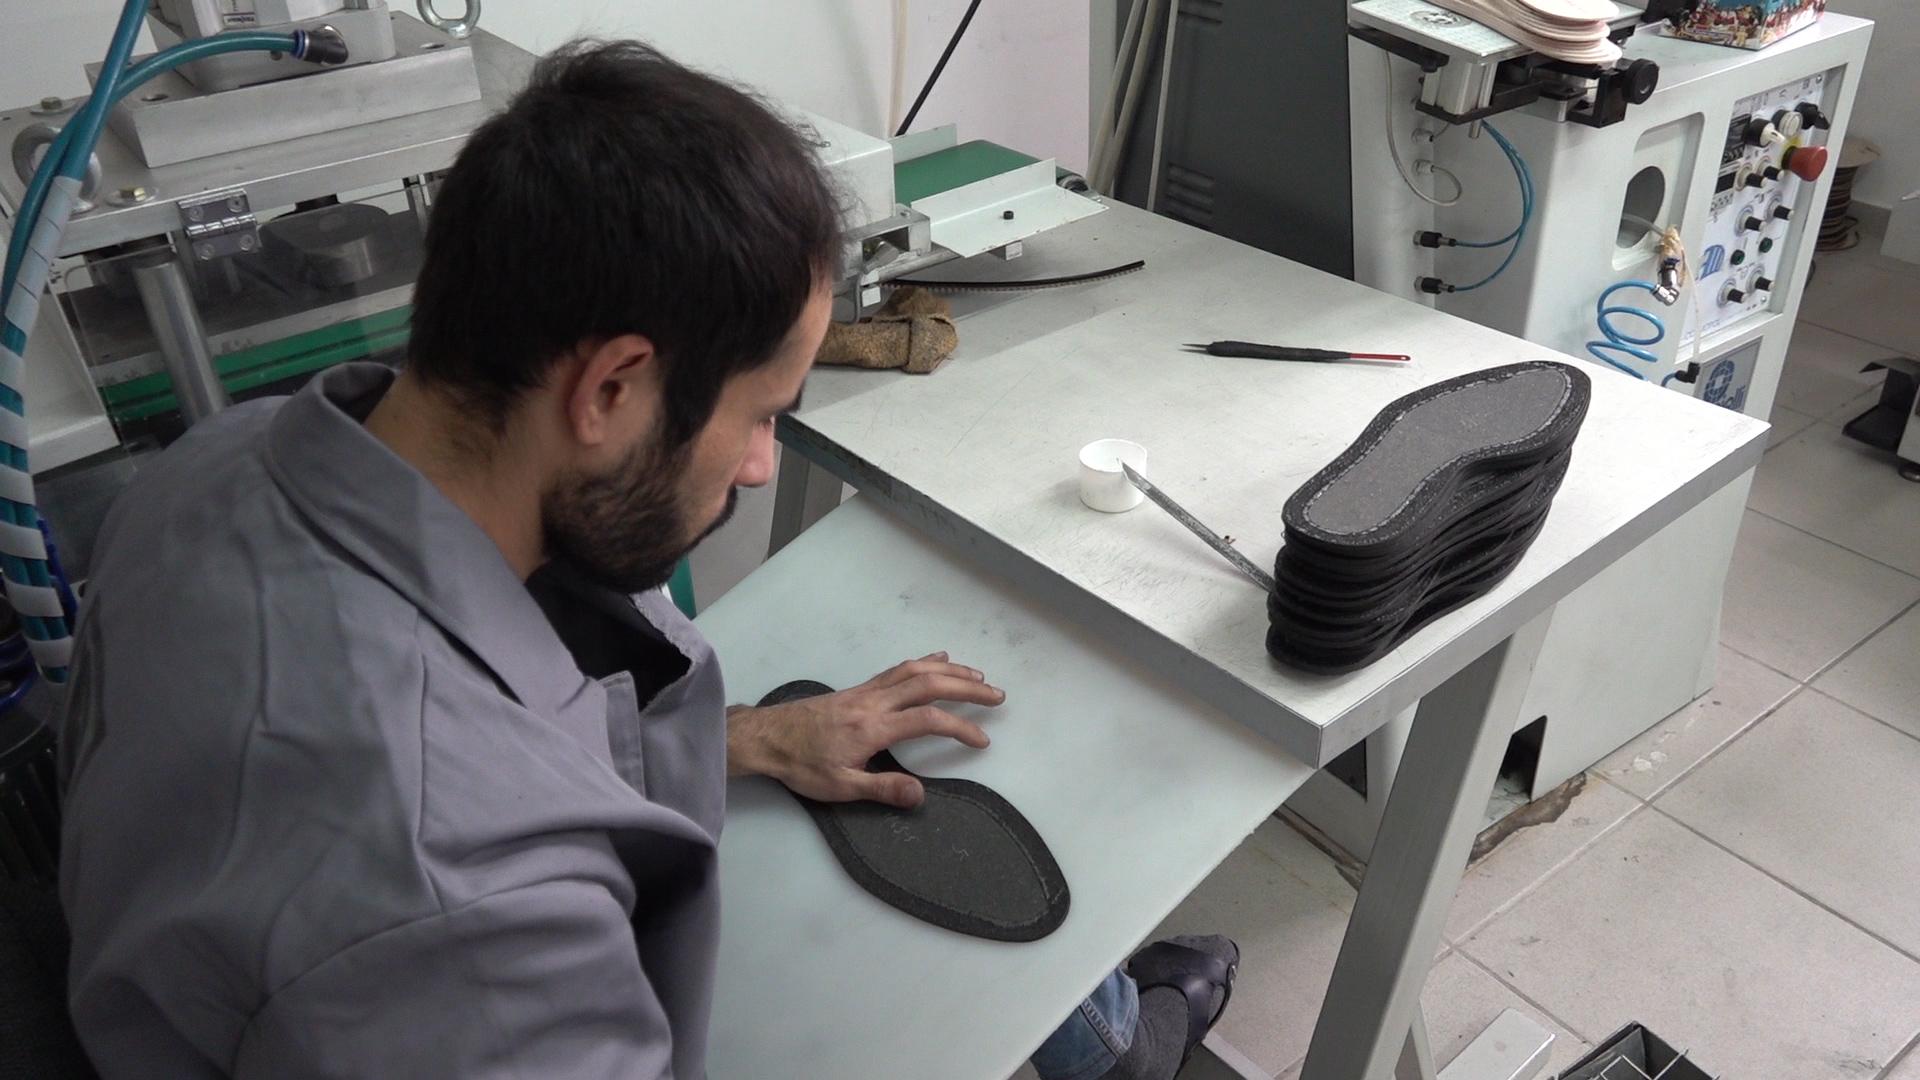 The Art of Armenian Shoemaking